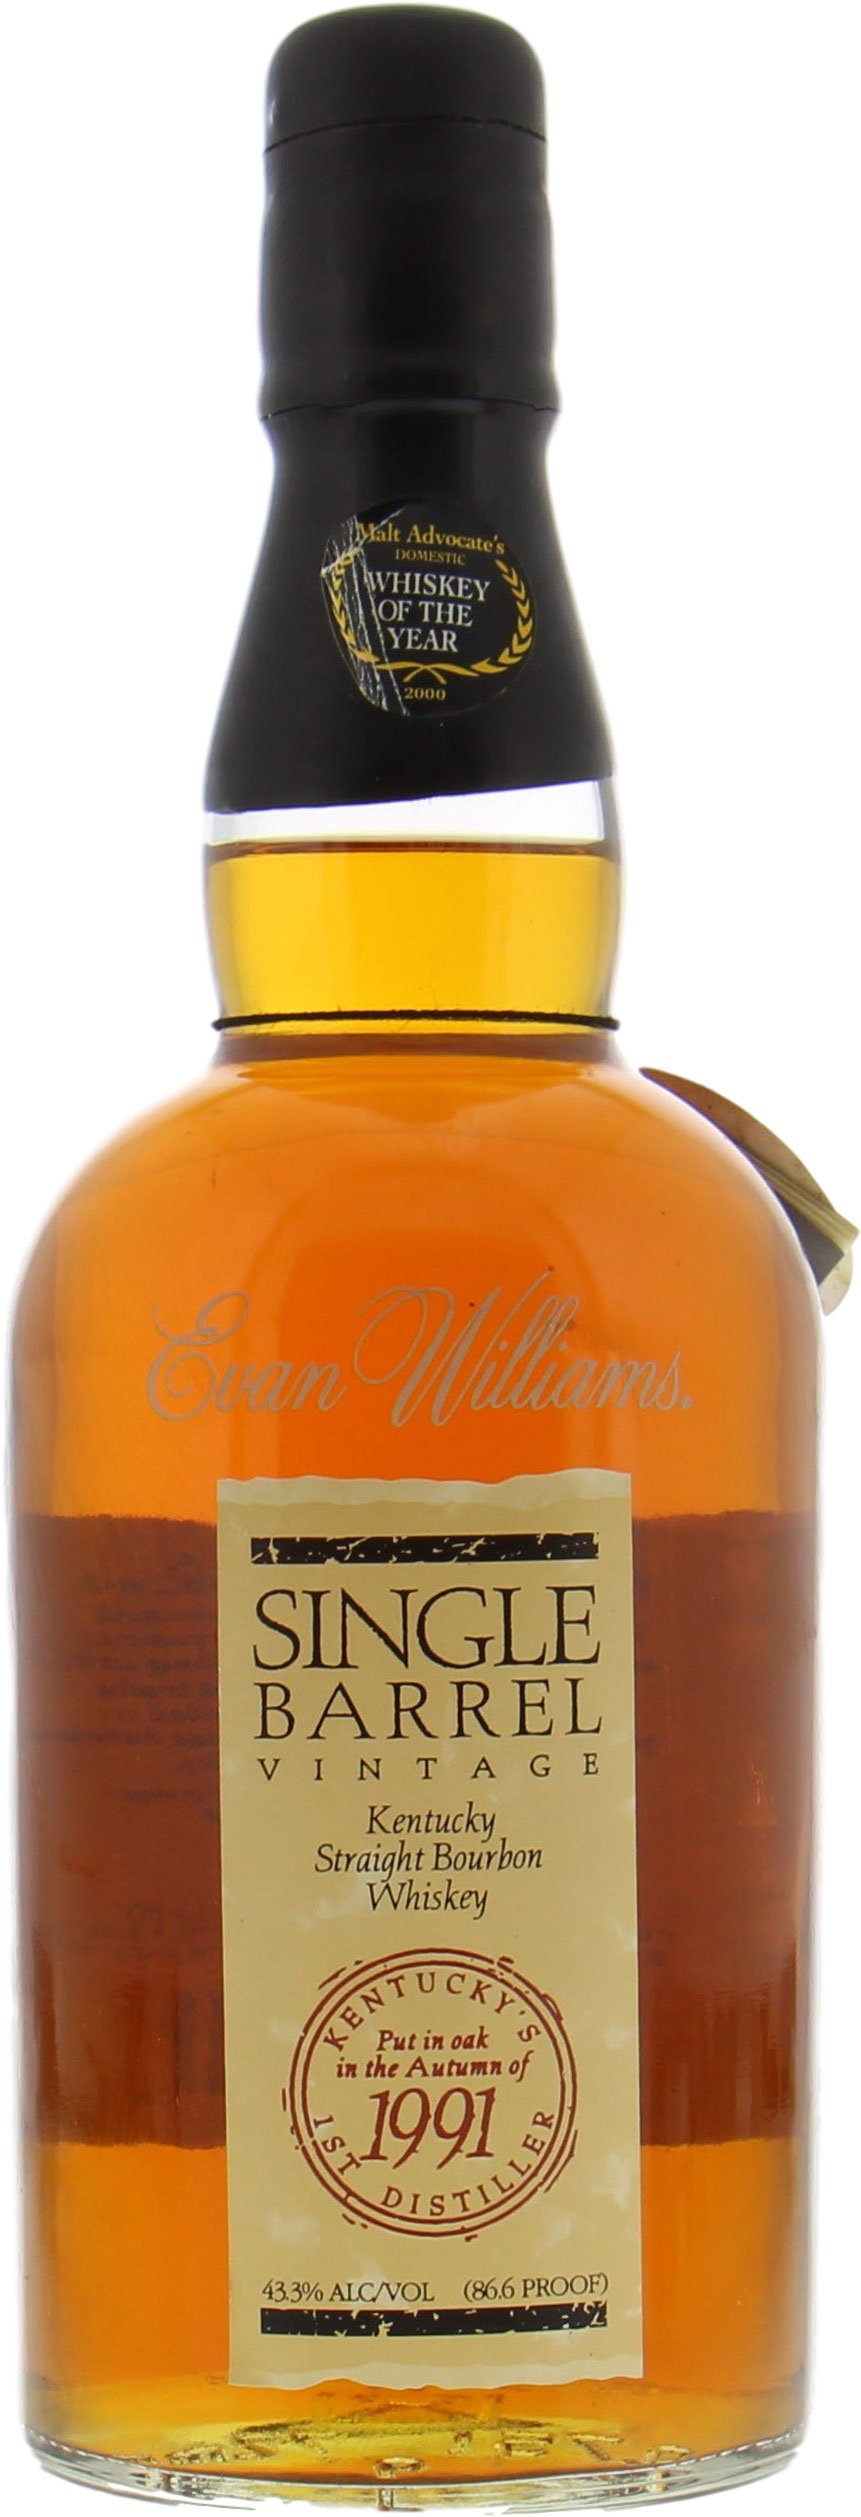 Olde Van Williams - Evan Williams 1991 Single Barrel Vintage Cask 51 43.3% 1991